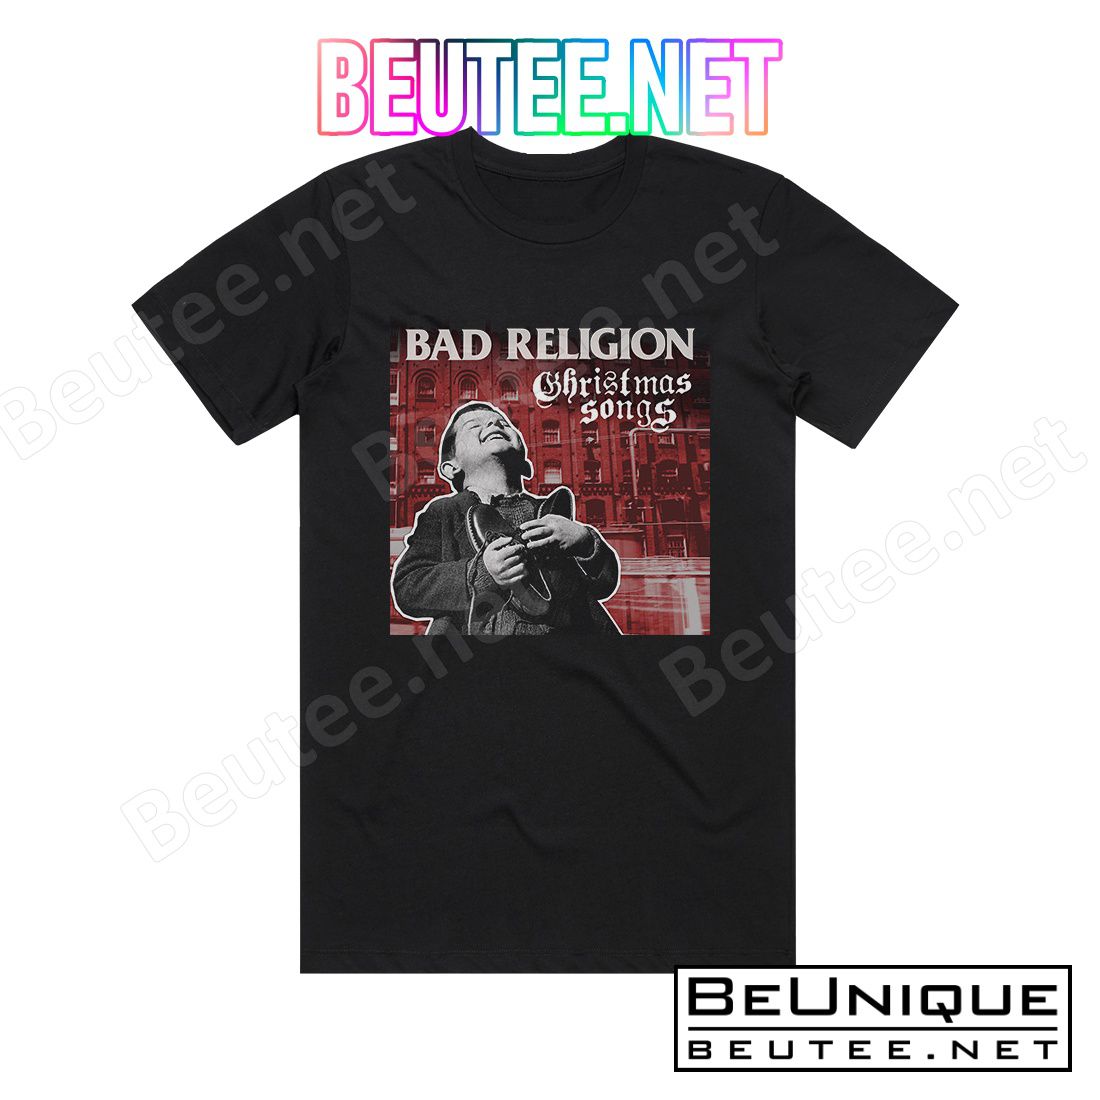 Bad Religion Christmas Songs Album Cover T-Shirt